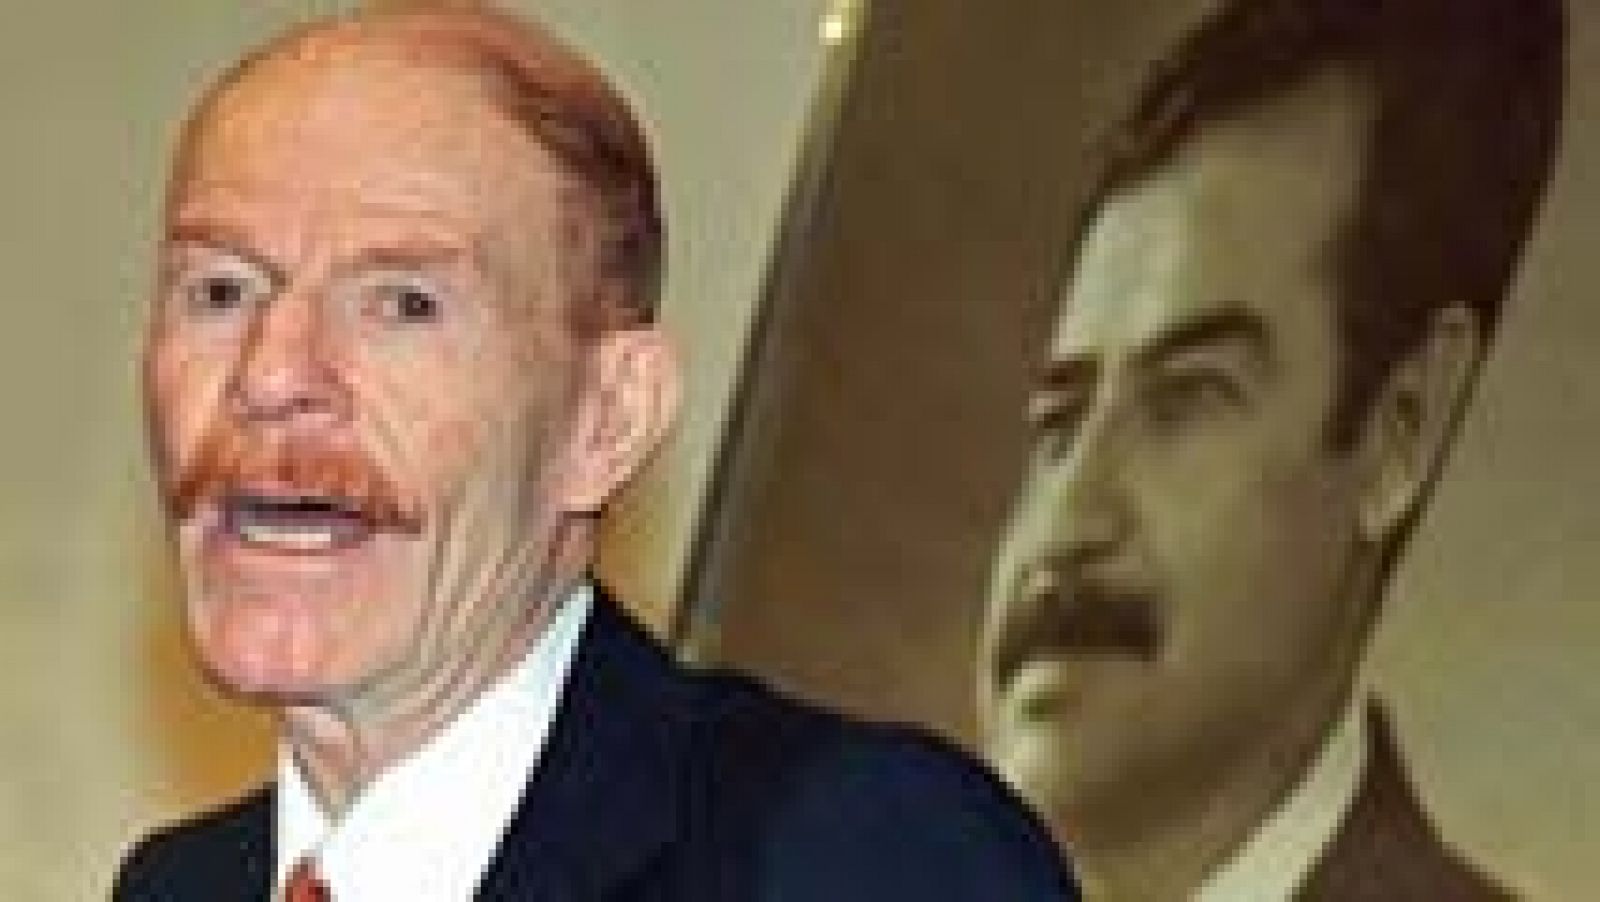 Telediario 1: Irak anuncia la muerte de Al Duri, "número dos" de Sadam Husein e "ideólogo" del Estado Islámico | RTVE Play